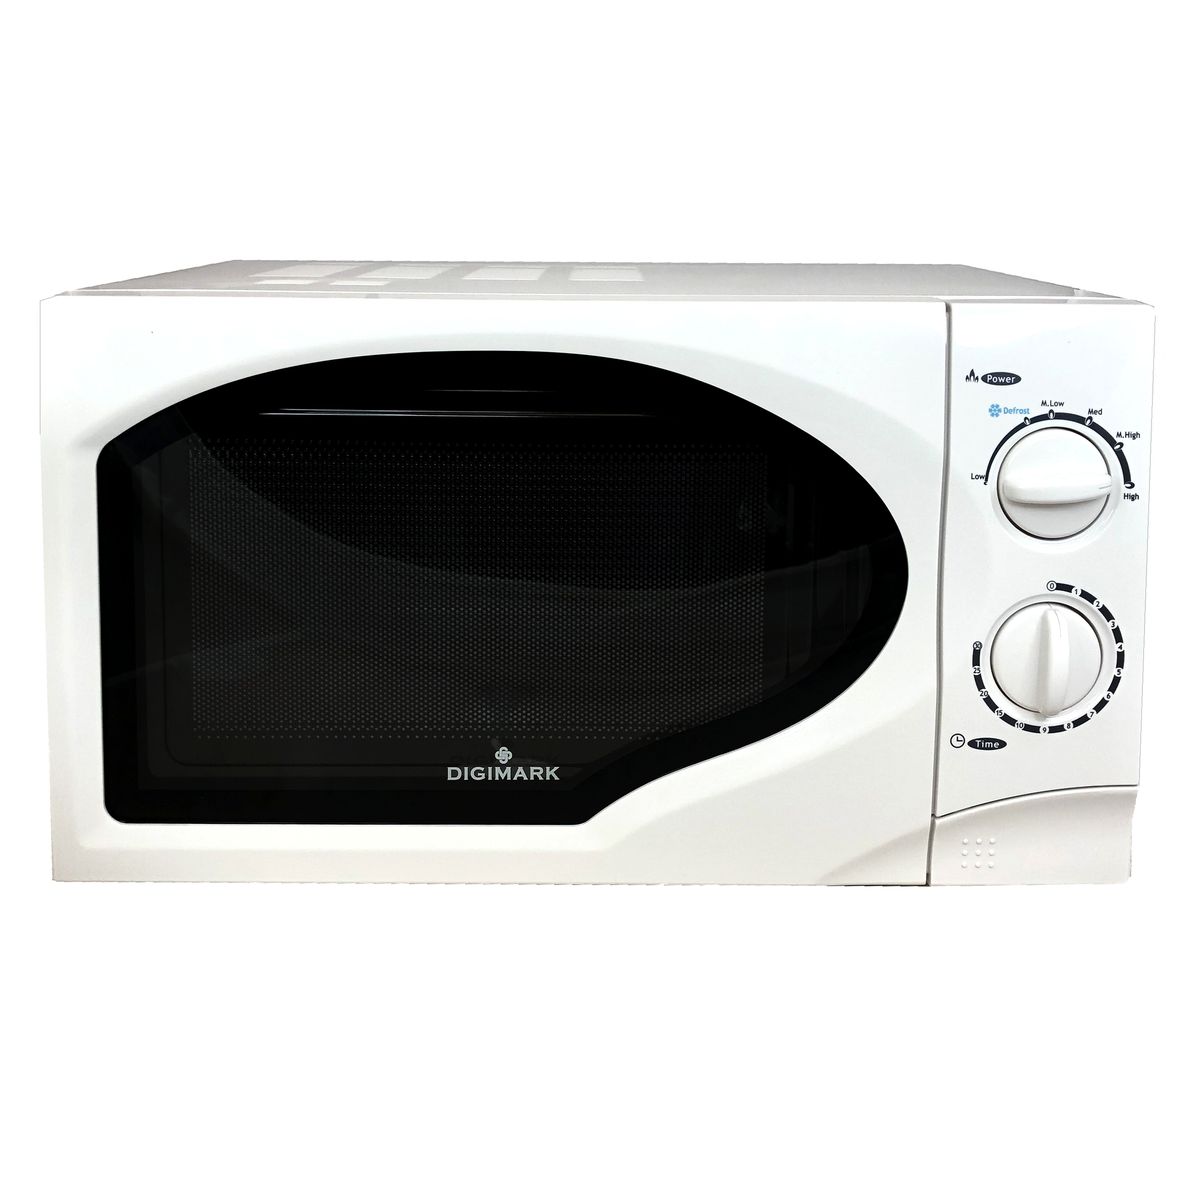 Digimark 23 Litre 900W Microwave Oven